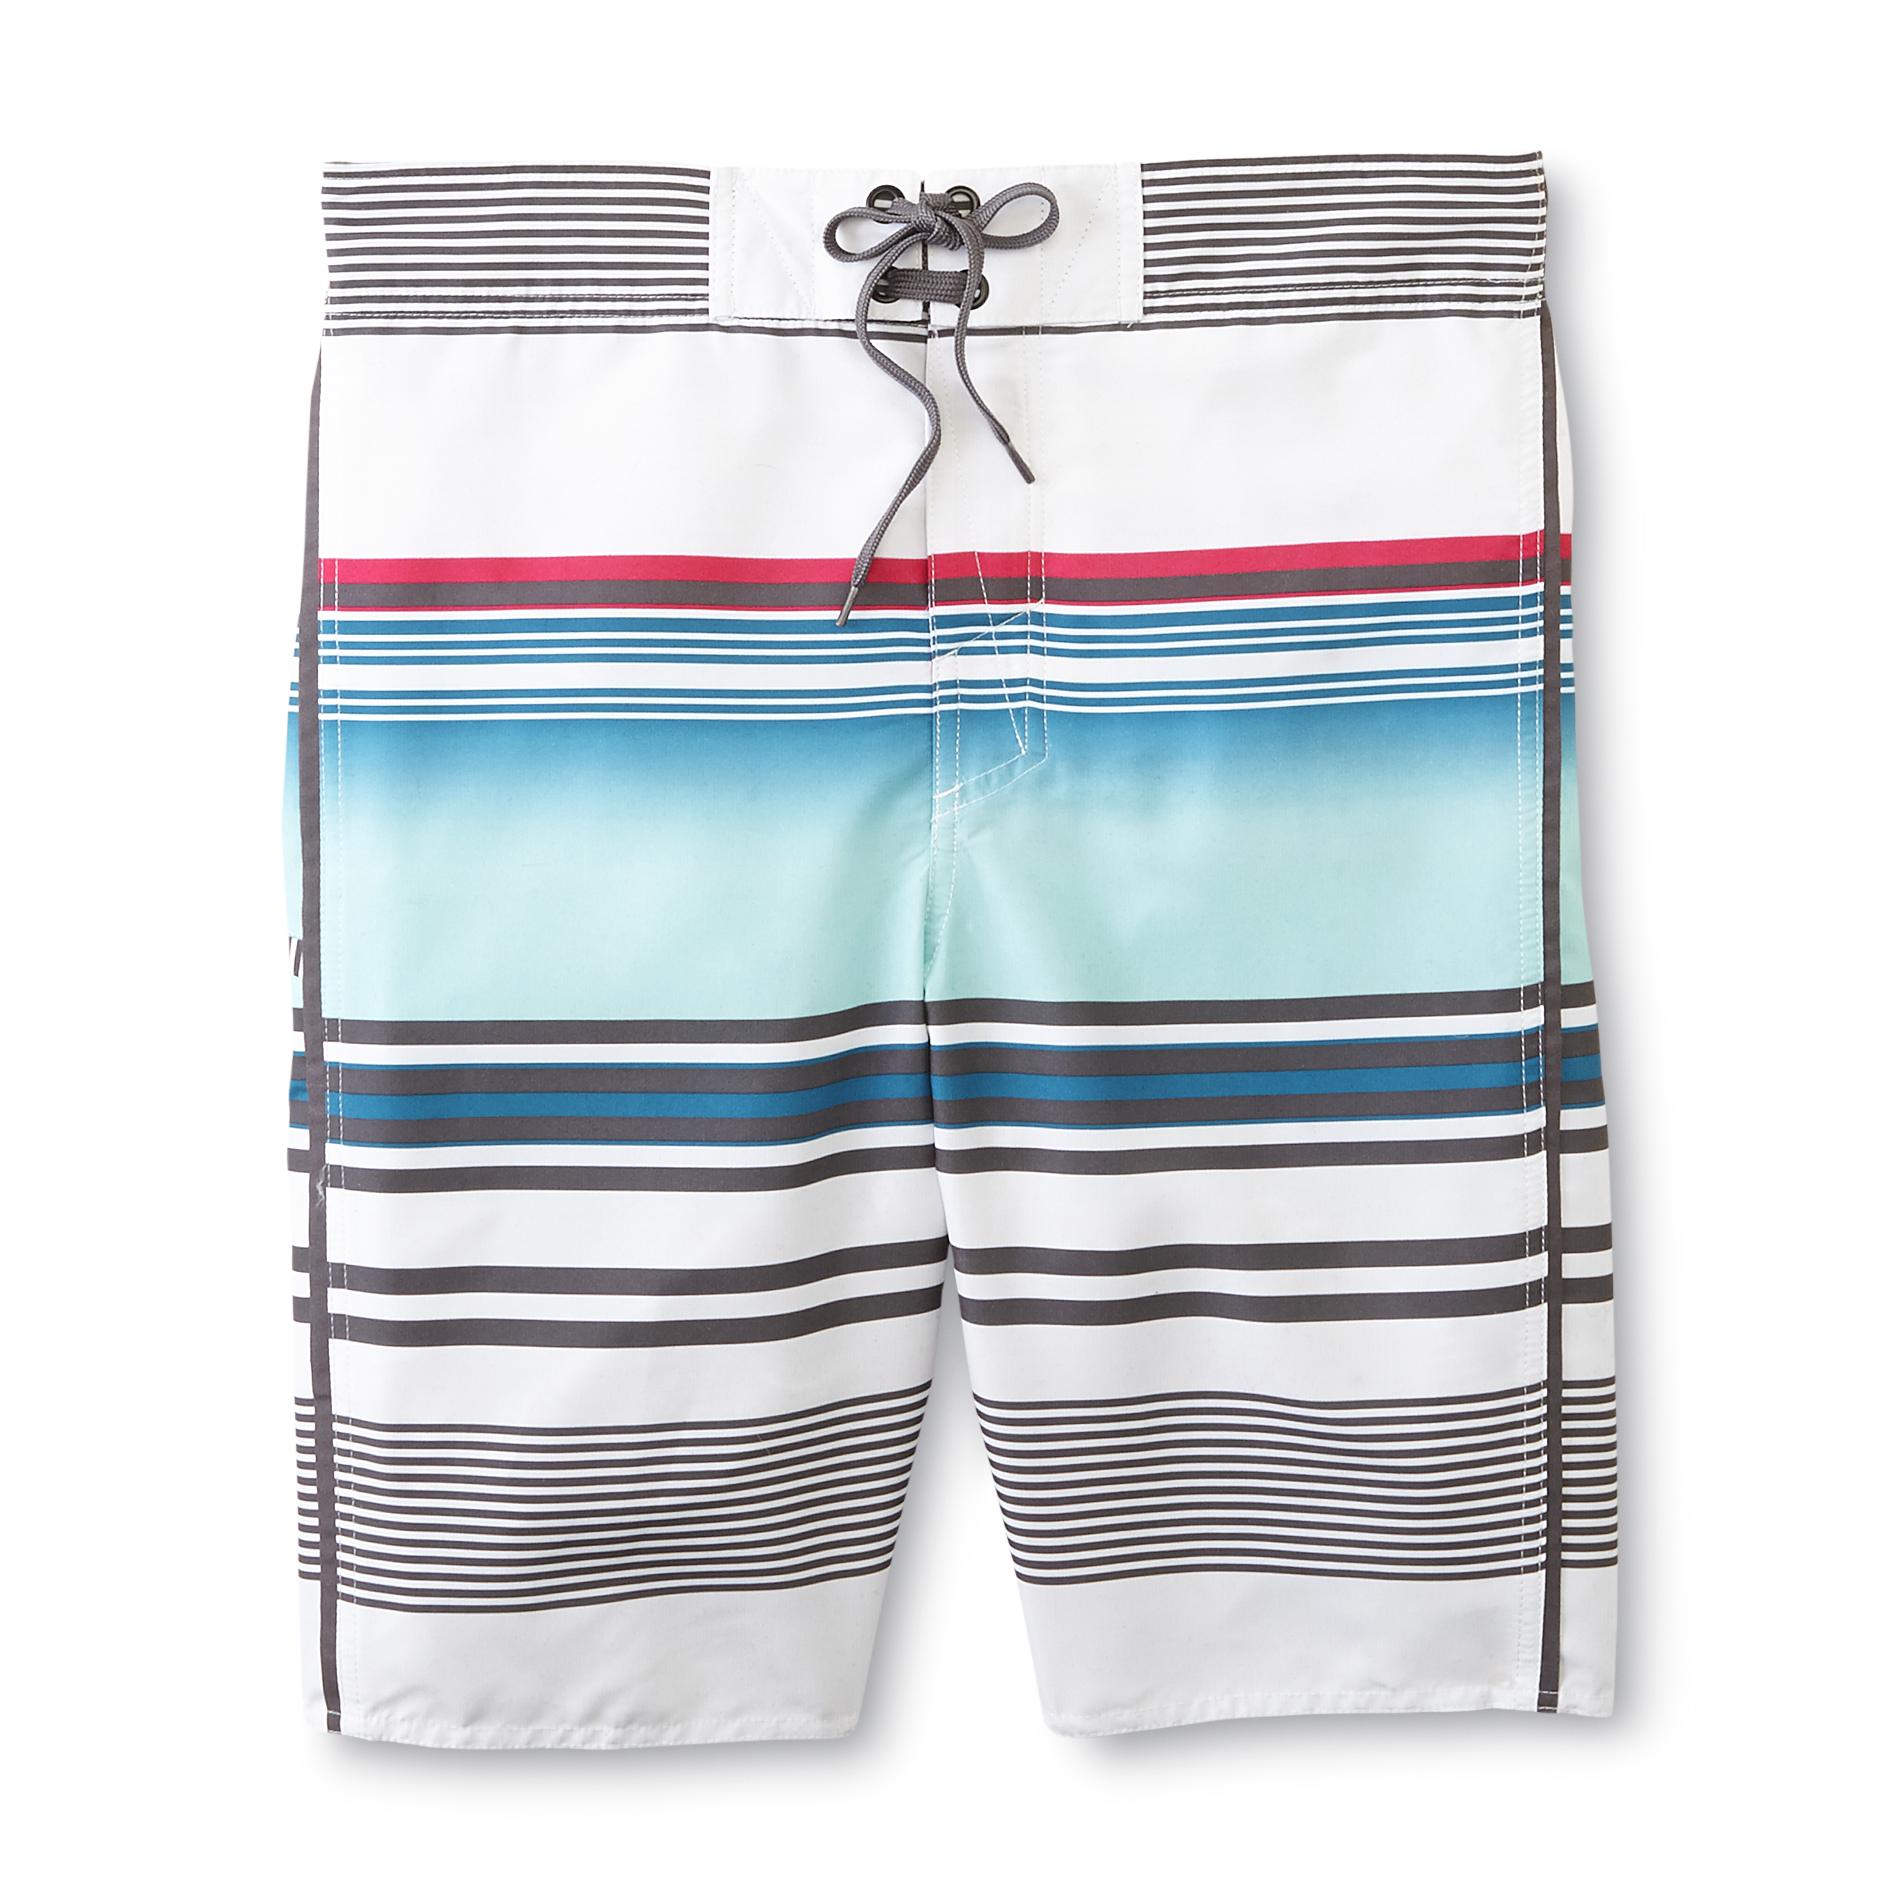 Joe Boxer Men's Swim Trunks - Striped